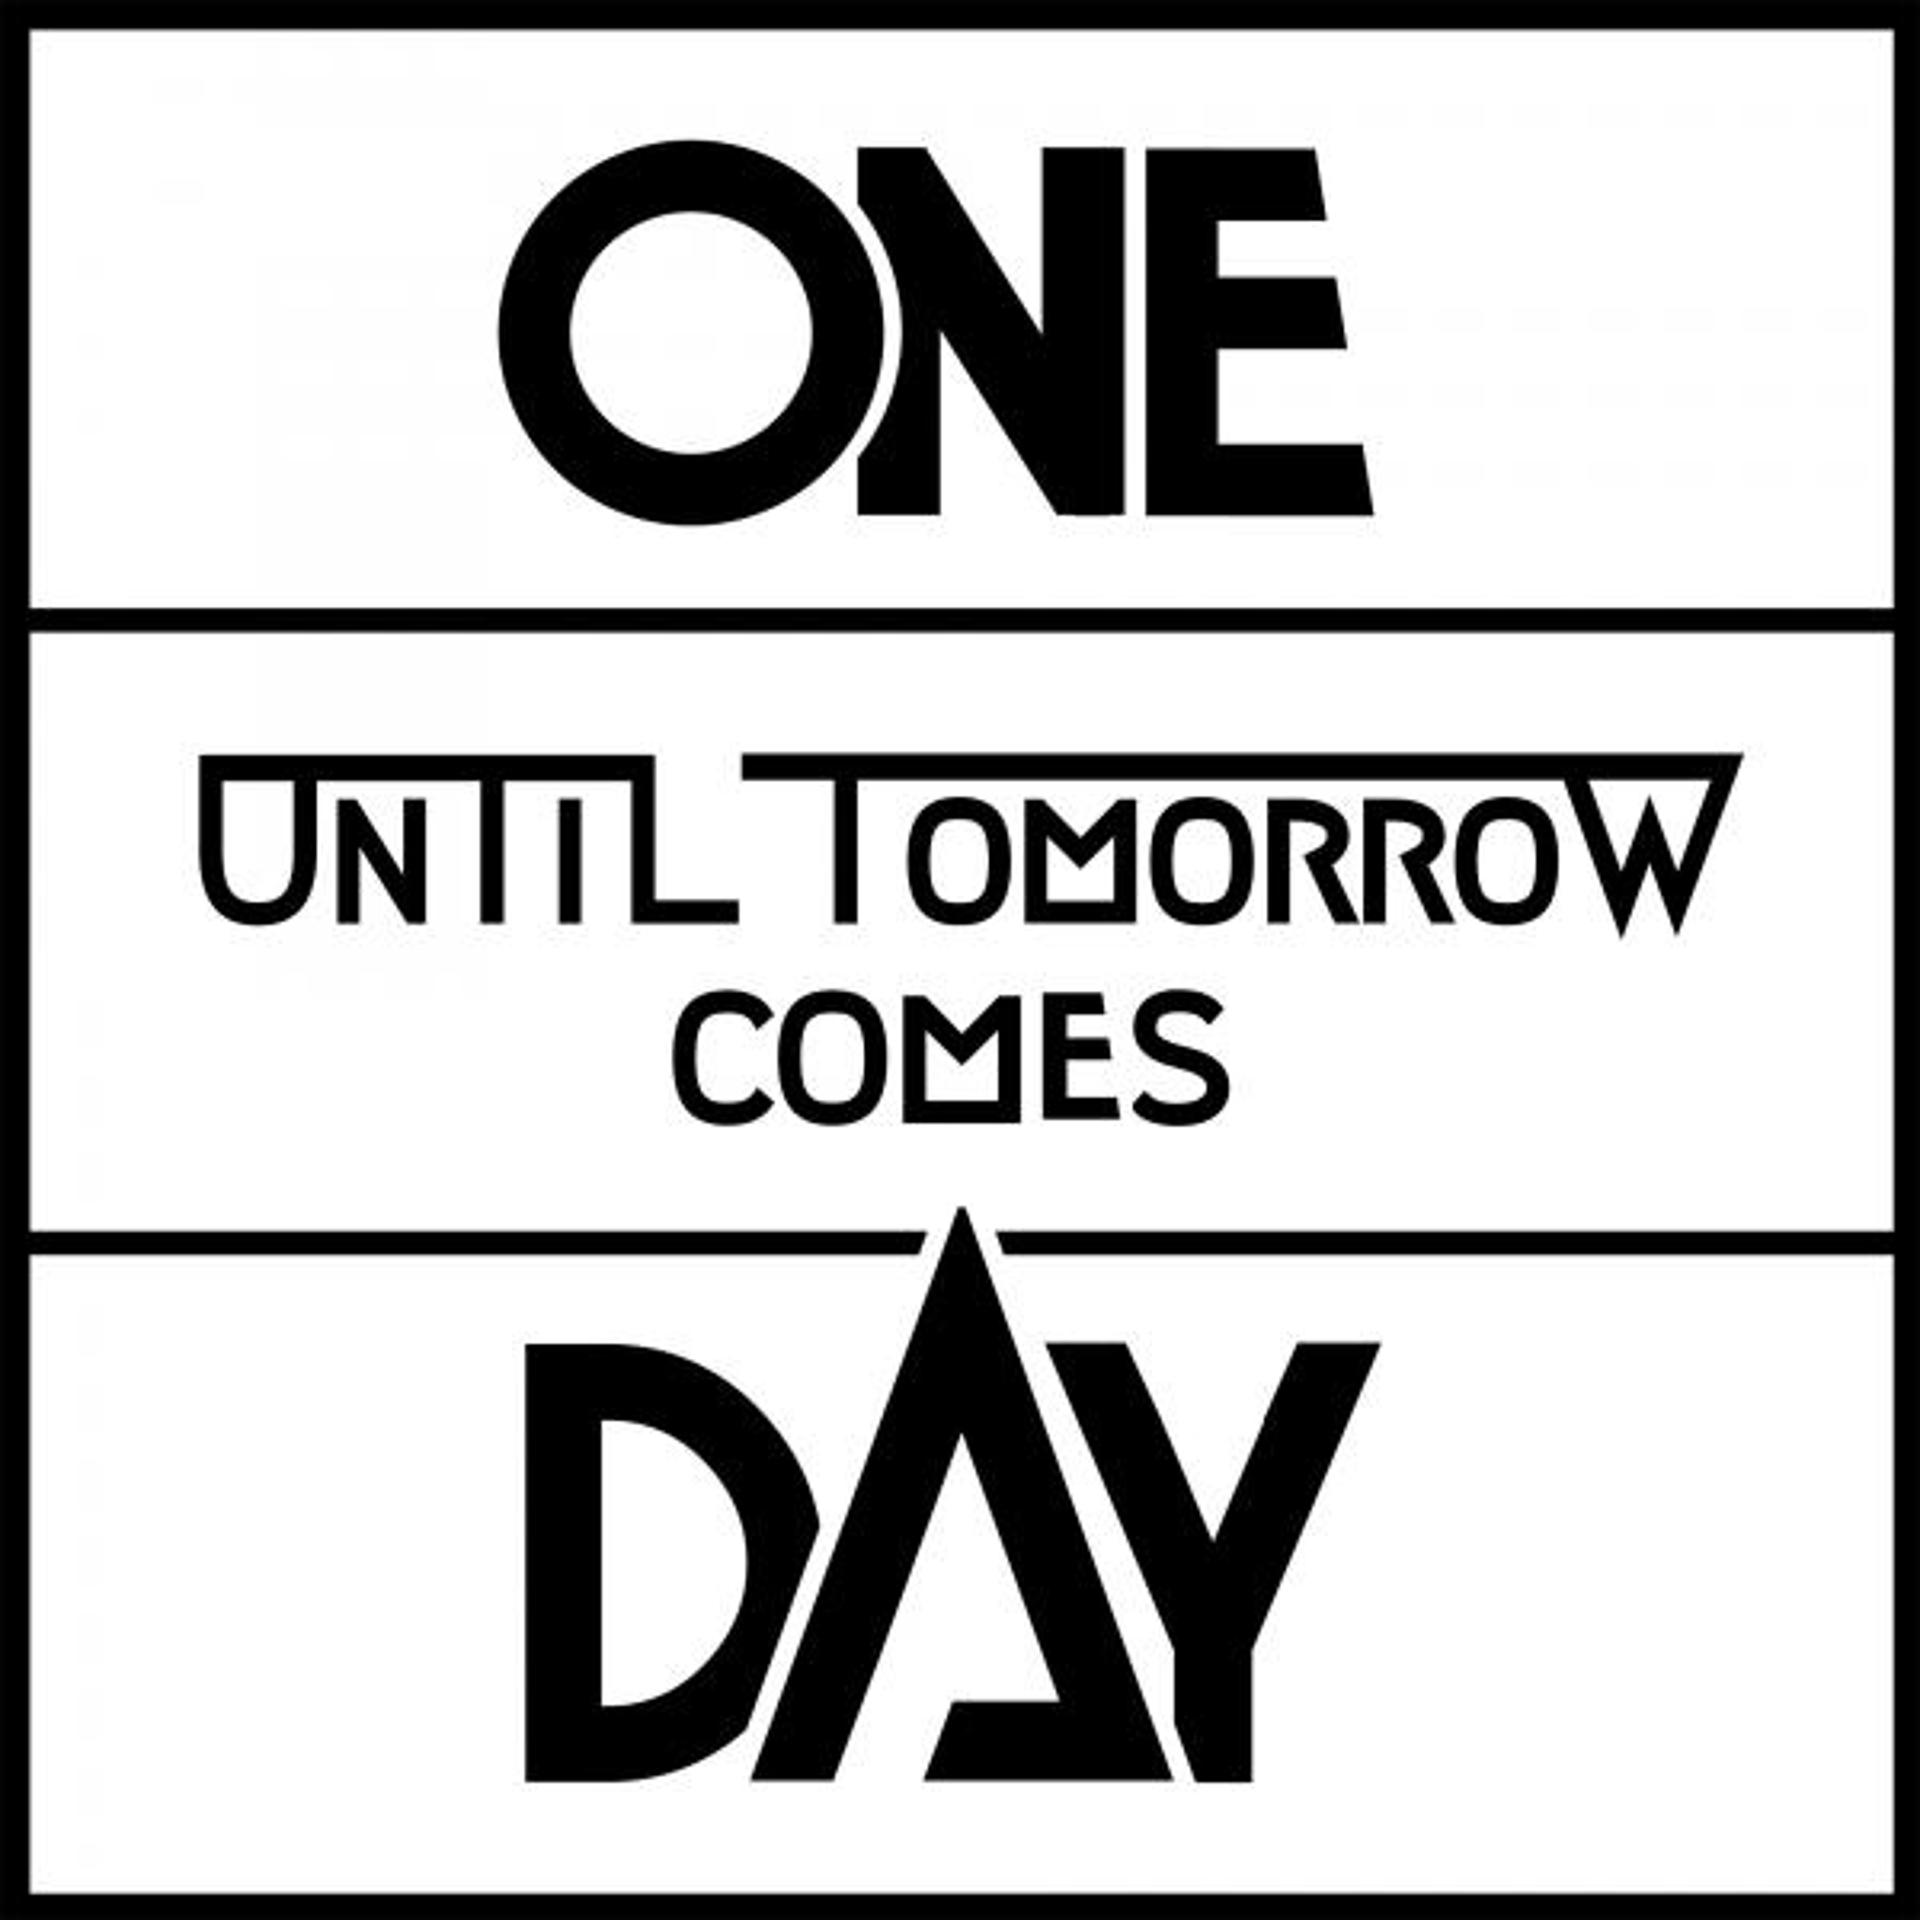 Tomorrow come late